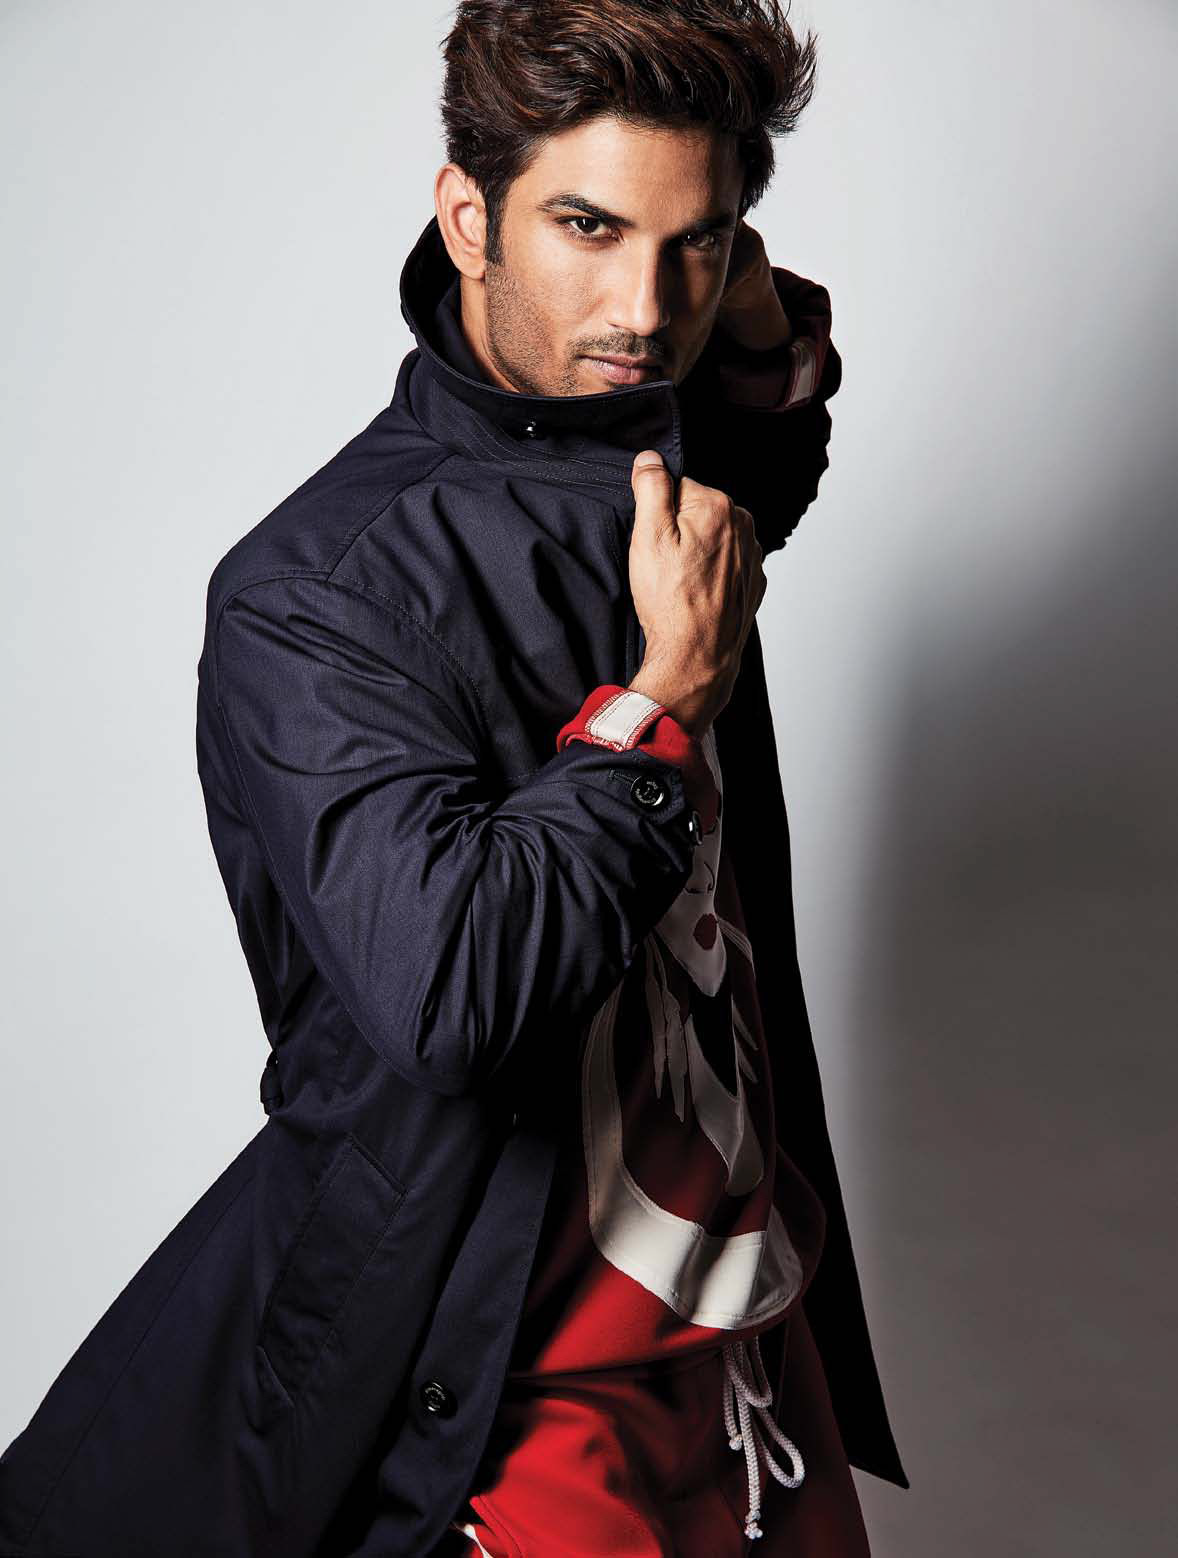 Sushant Singh Rajput #FilmFare #Photoshoot #Bollywood #Fashion